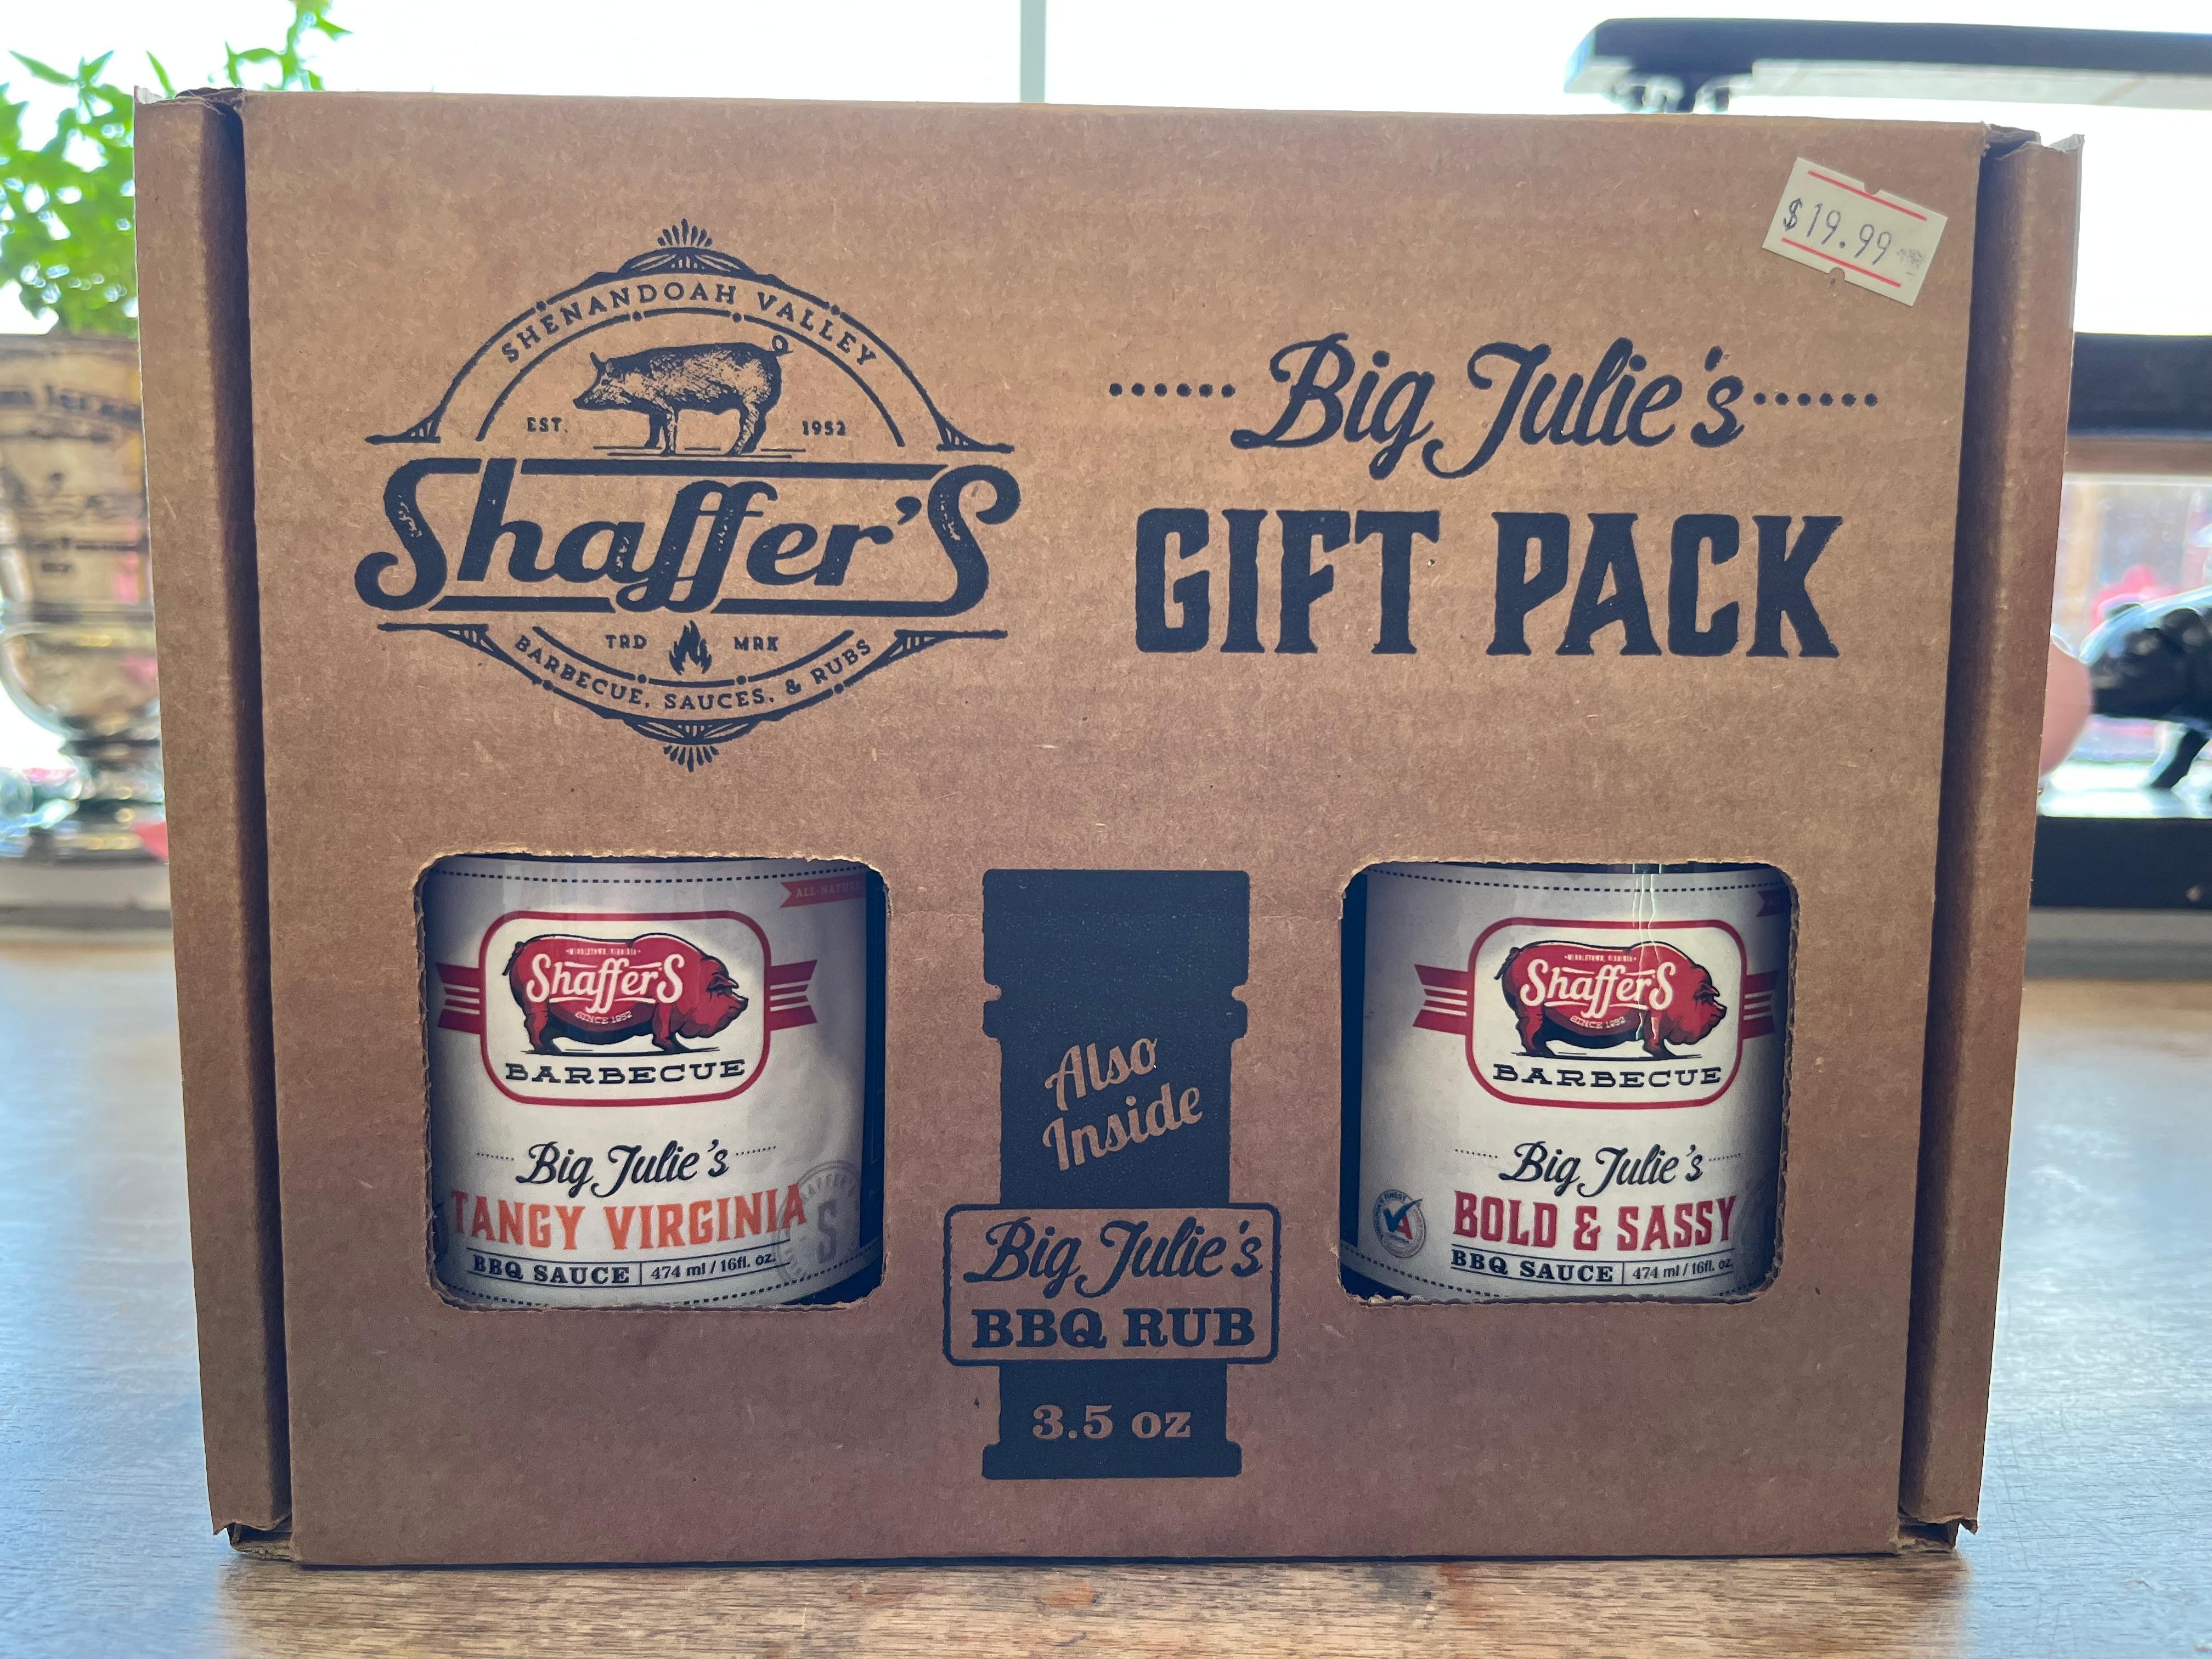 Shaffer's BBQ Sauce Gift Pack